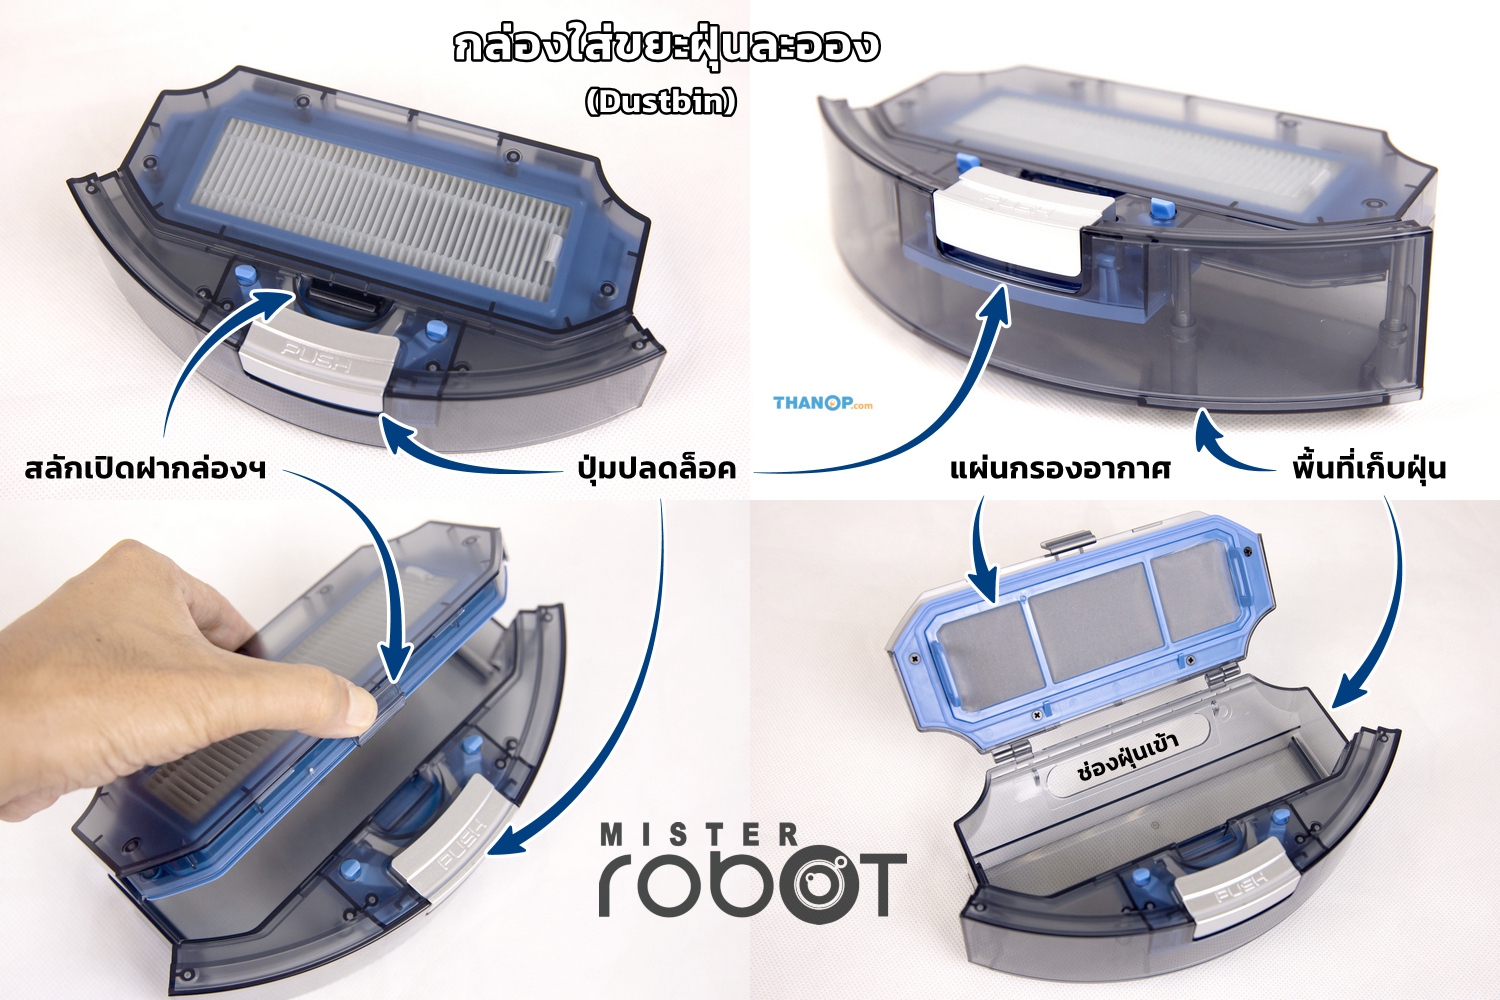 mister-robot-hybrid-laser-map-dustbin-detail